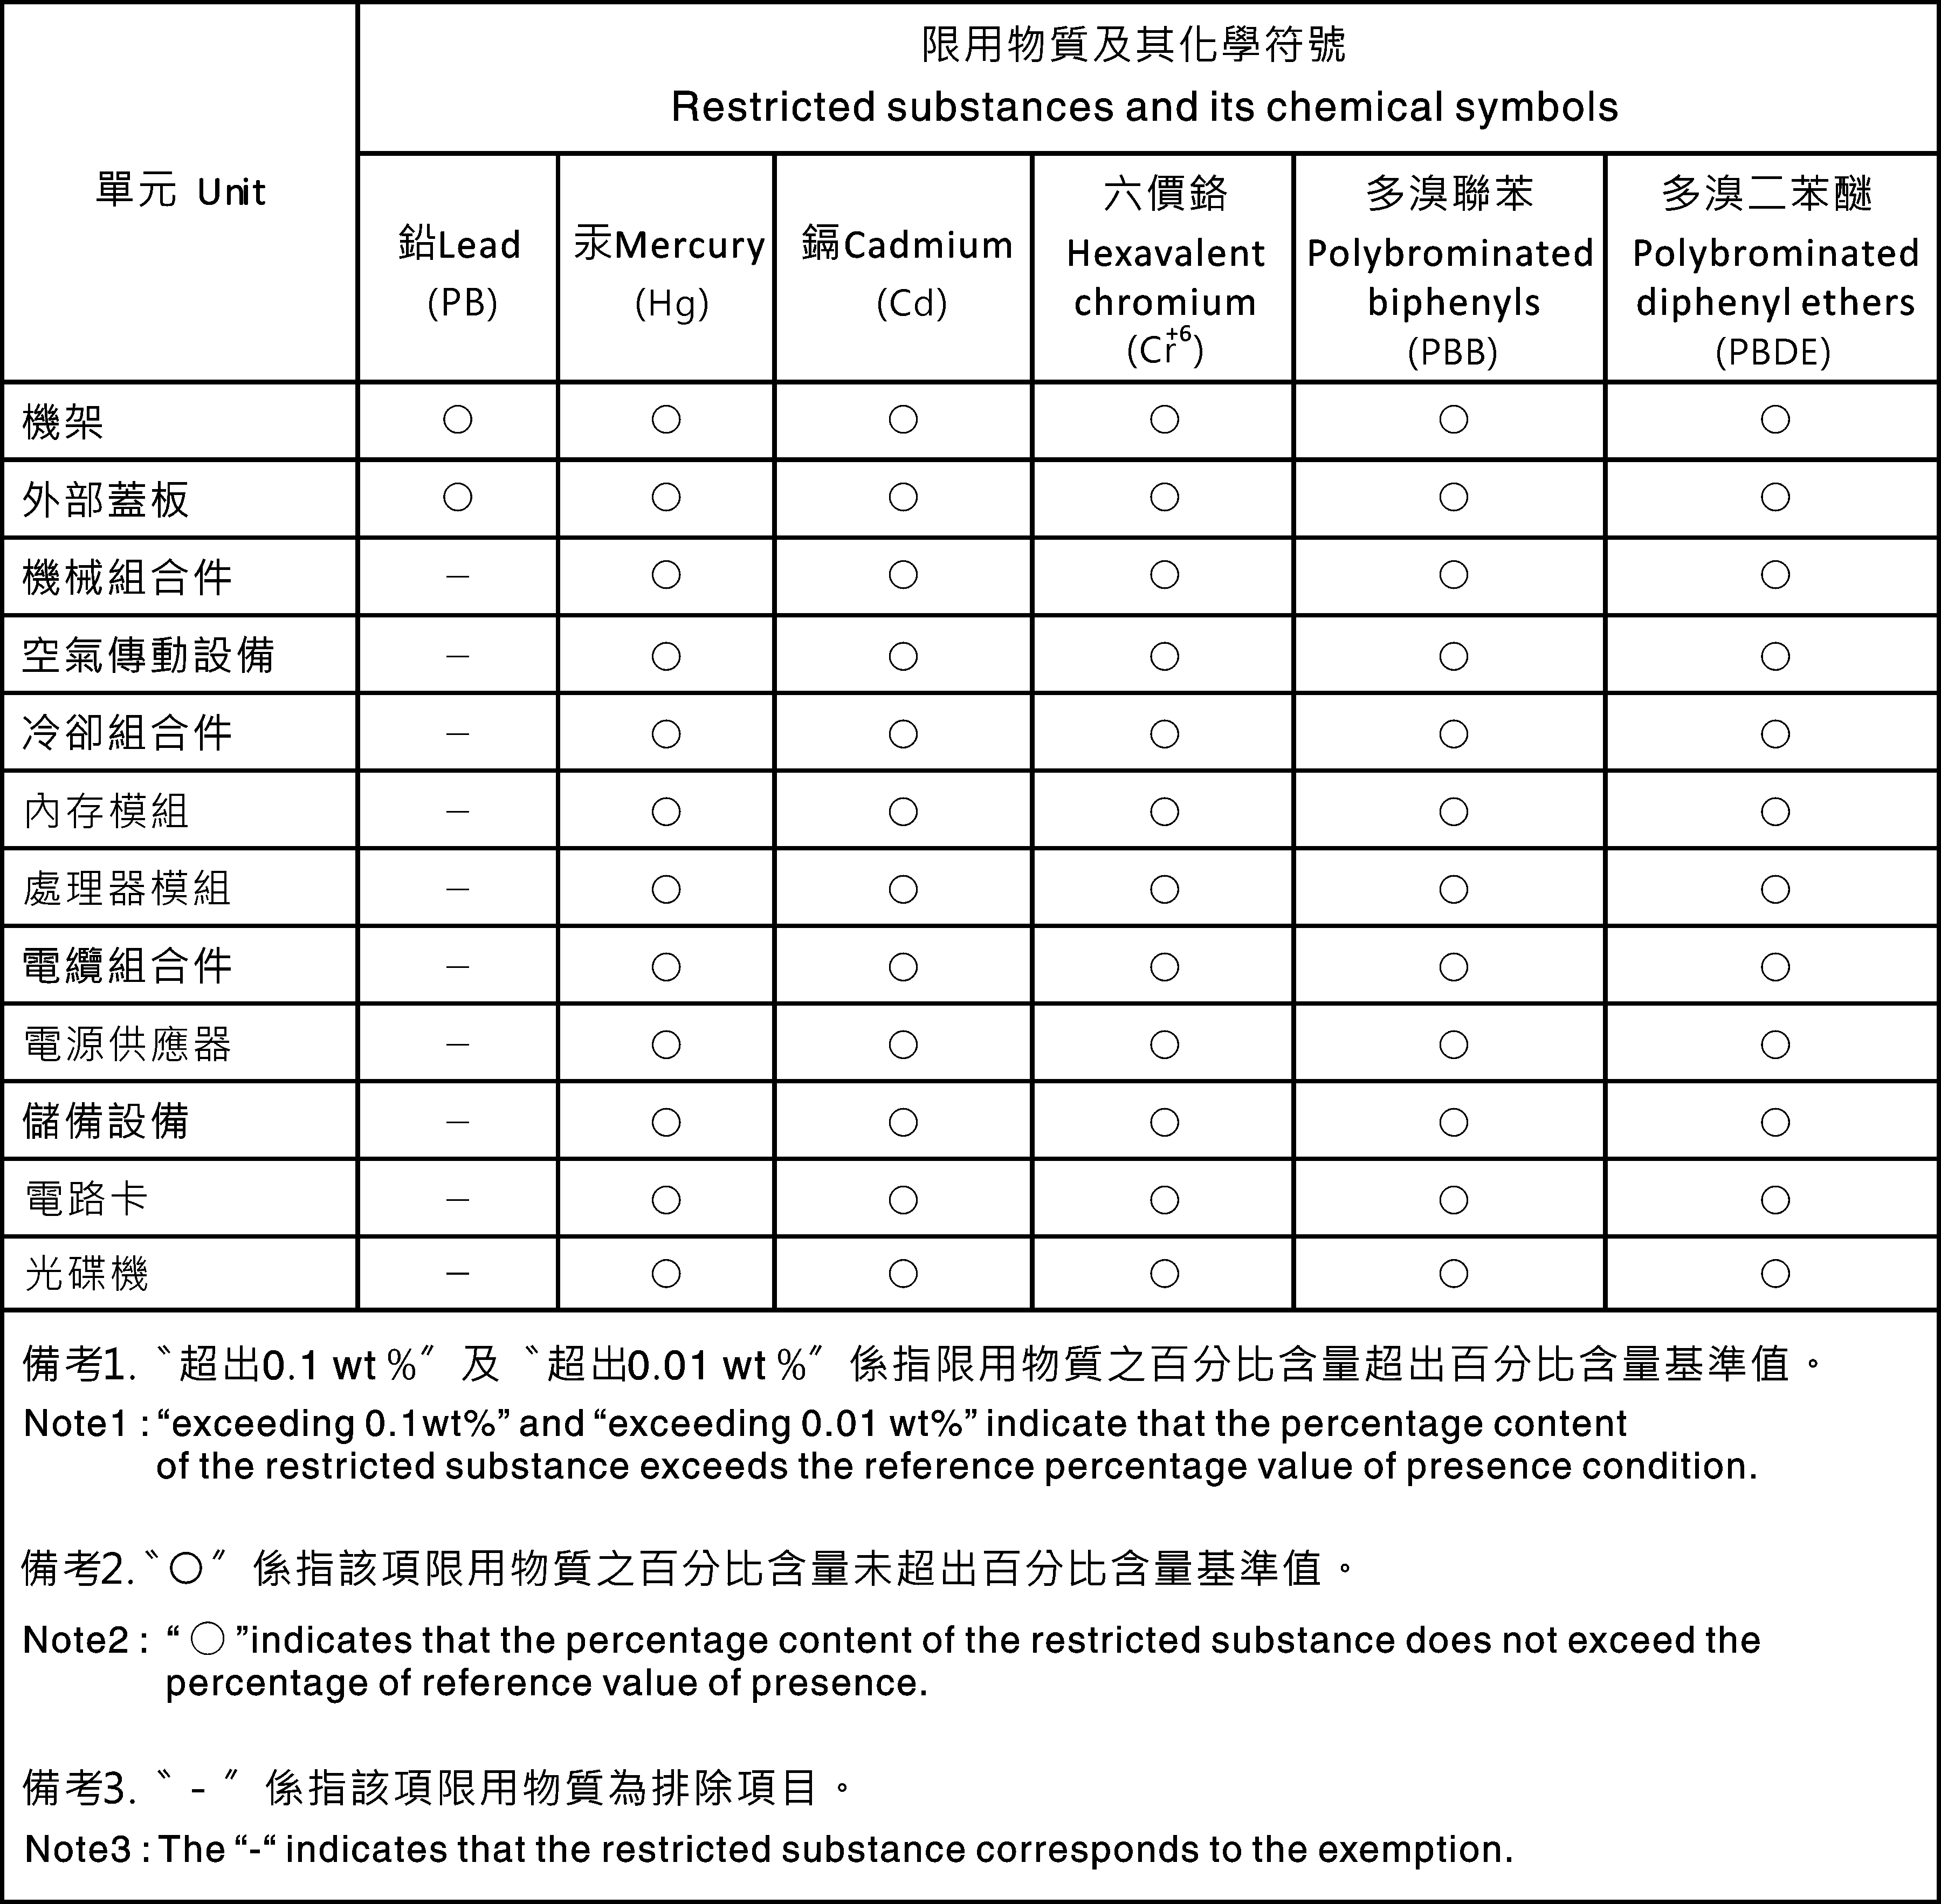 Taiwan Class A compliance statement